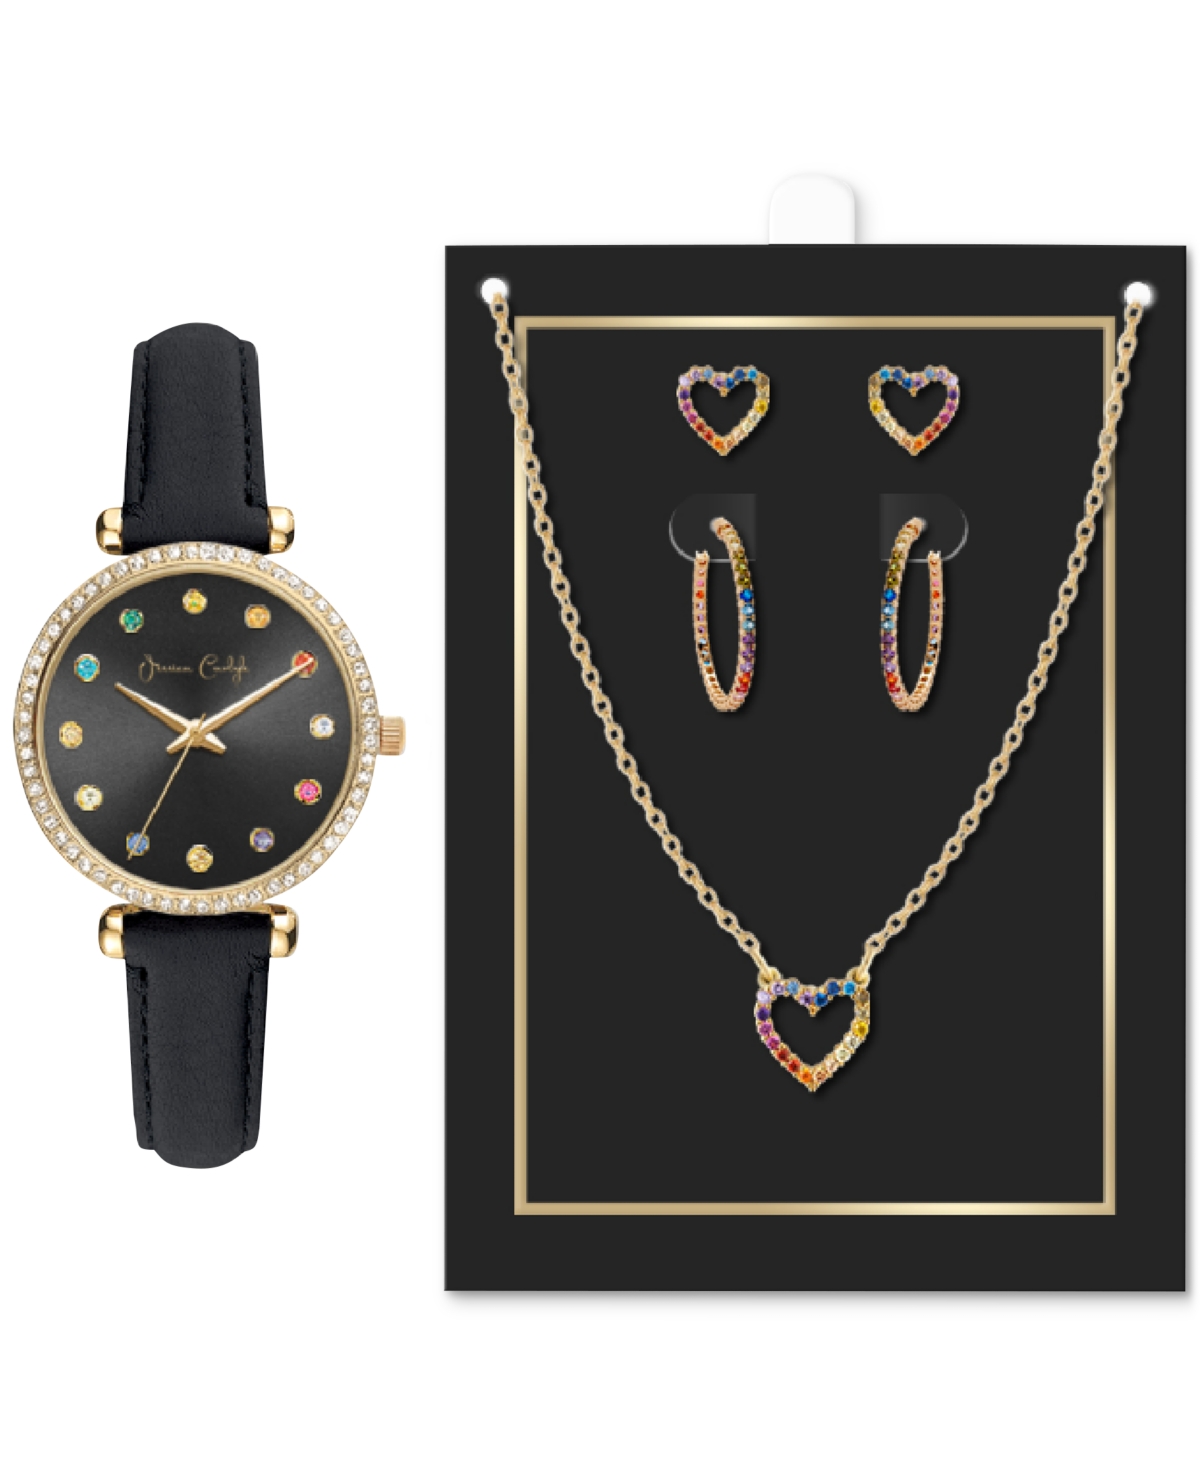 Women's Black Strap Watch 33mm Jewelry Gift Set - Gold